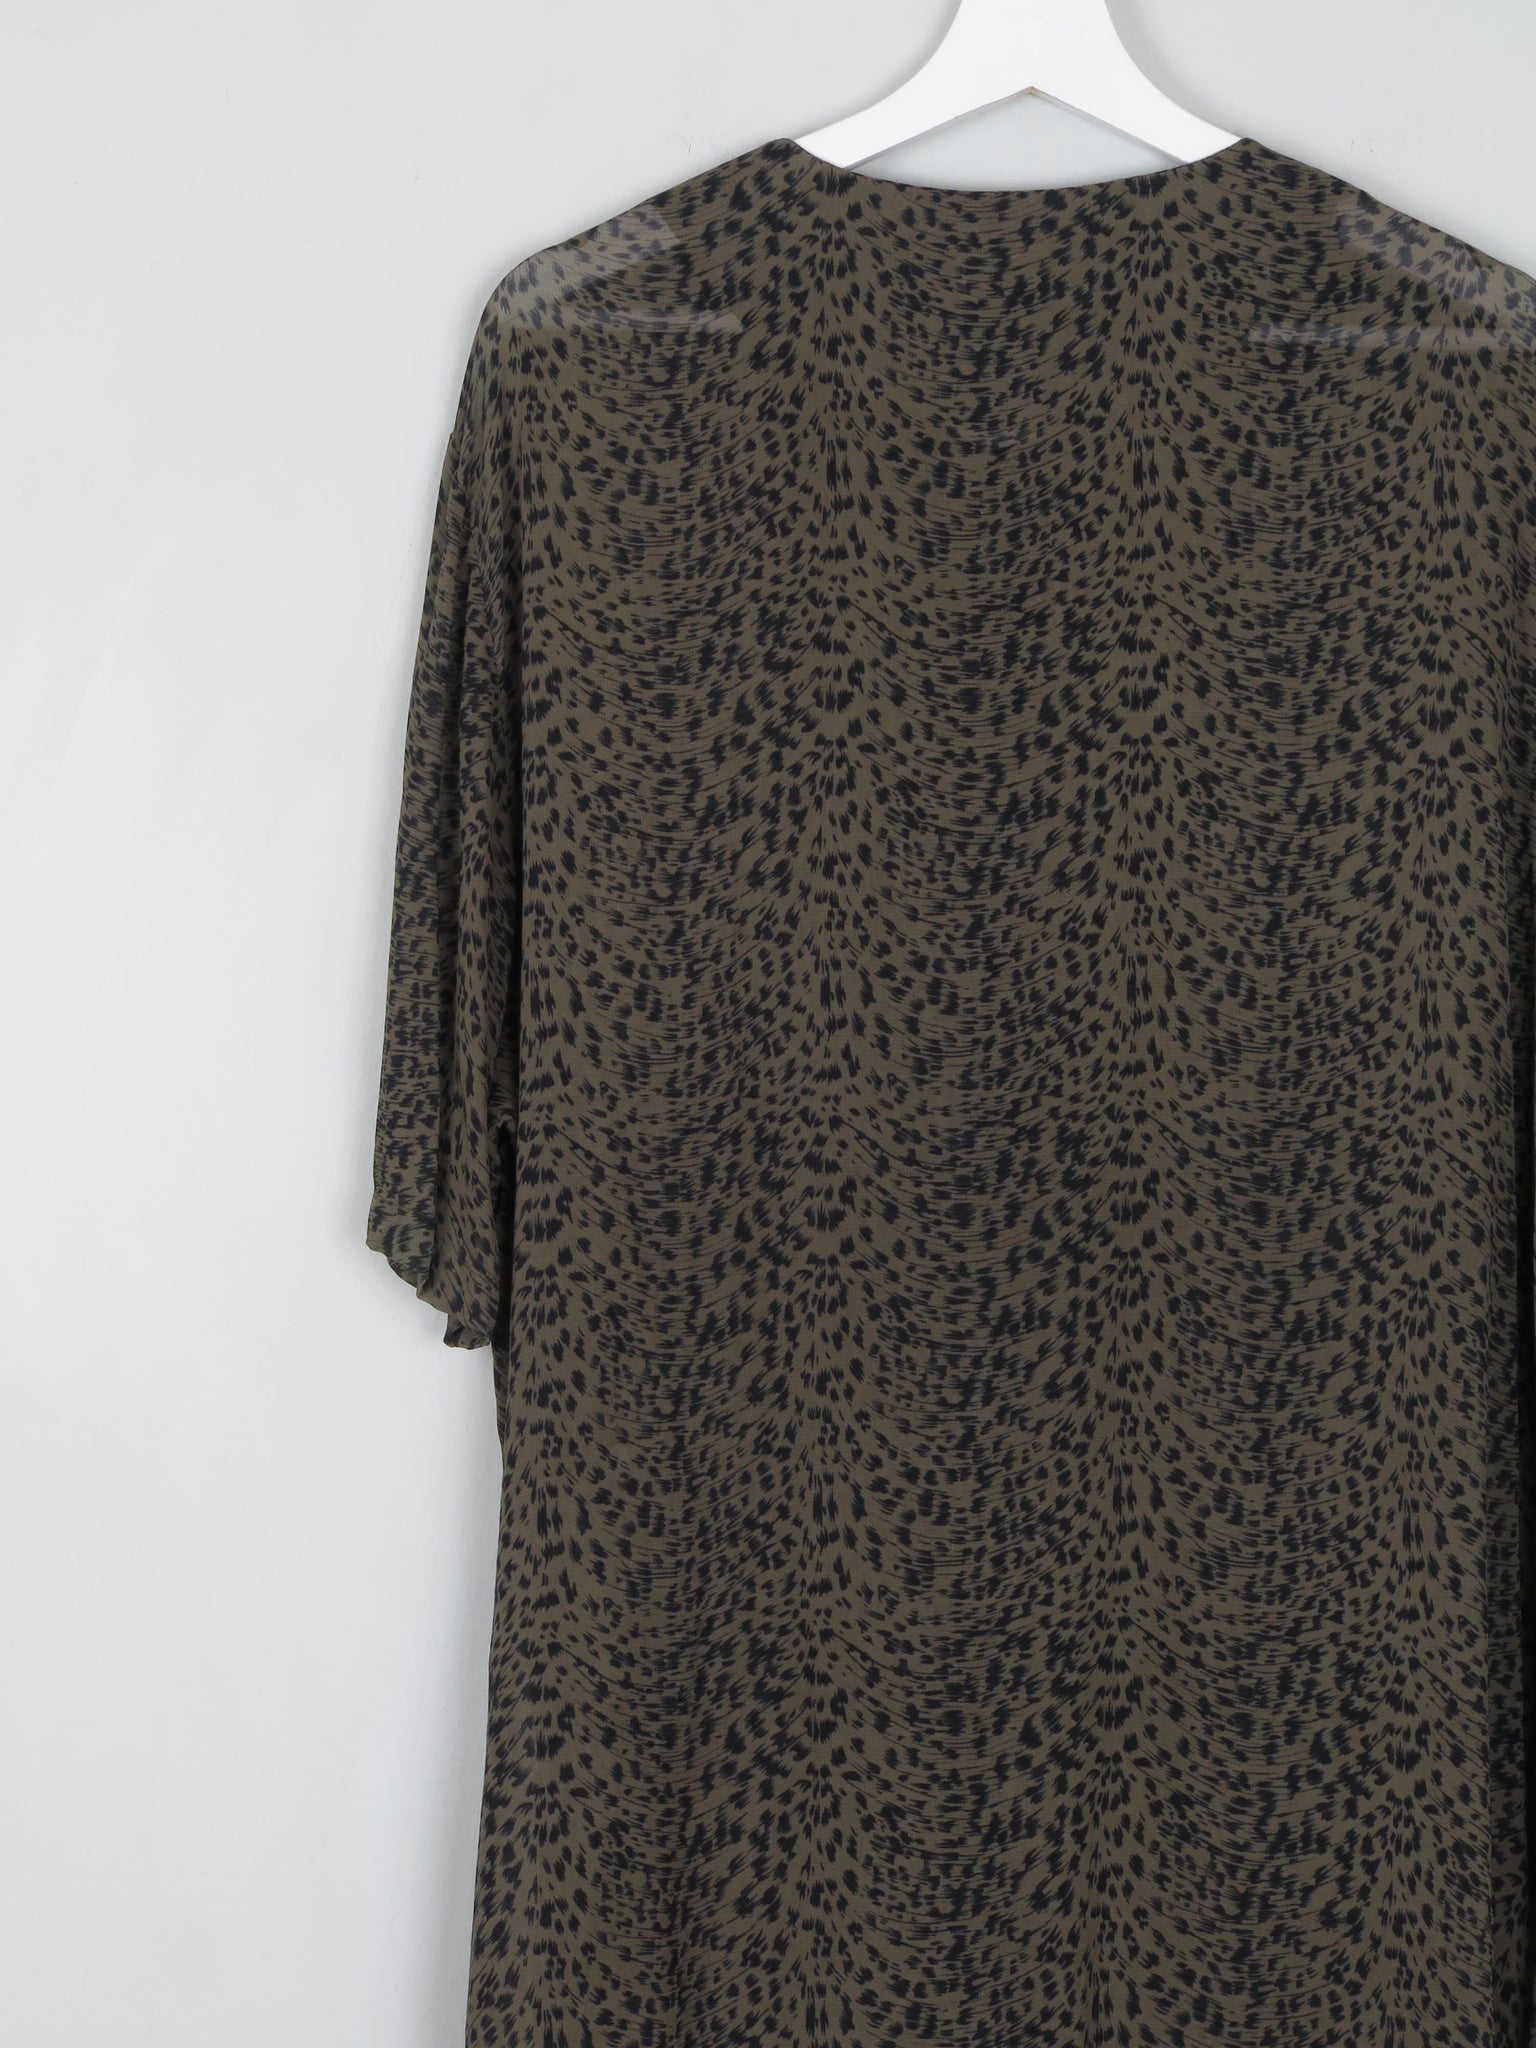 Women's Green Vintage Leopard Print Shirt/Dress L - The Harlequin